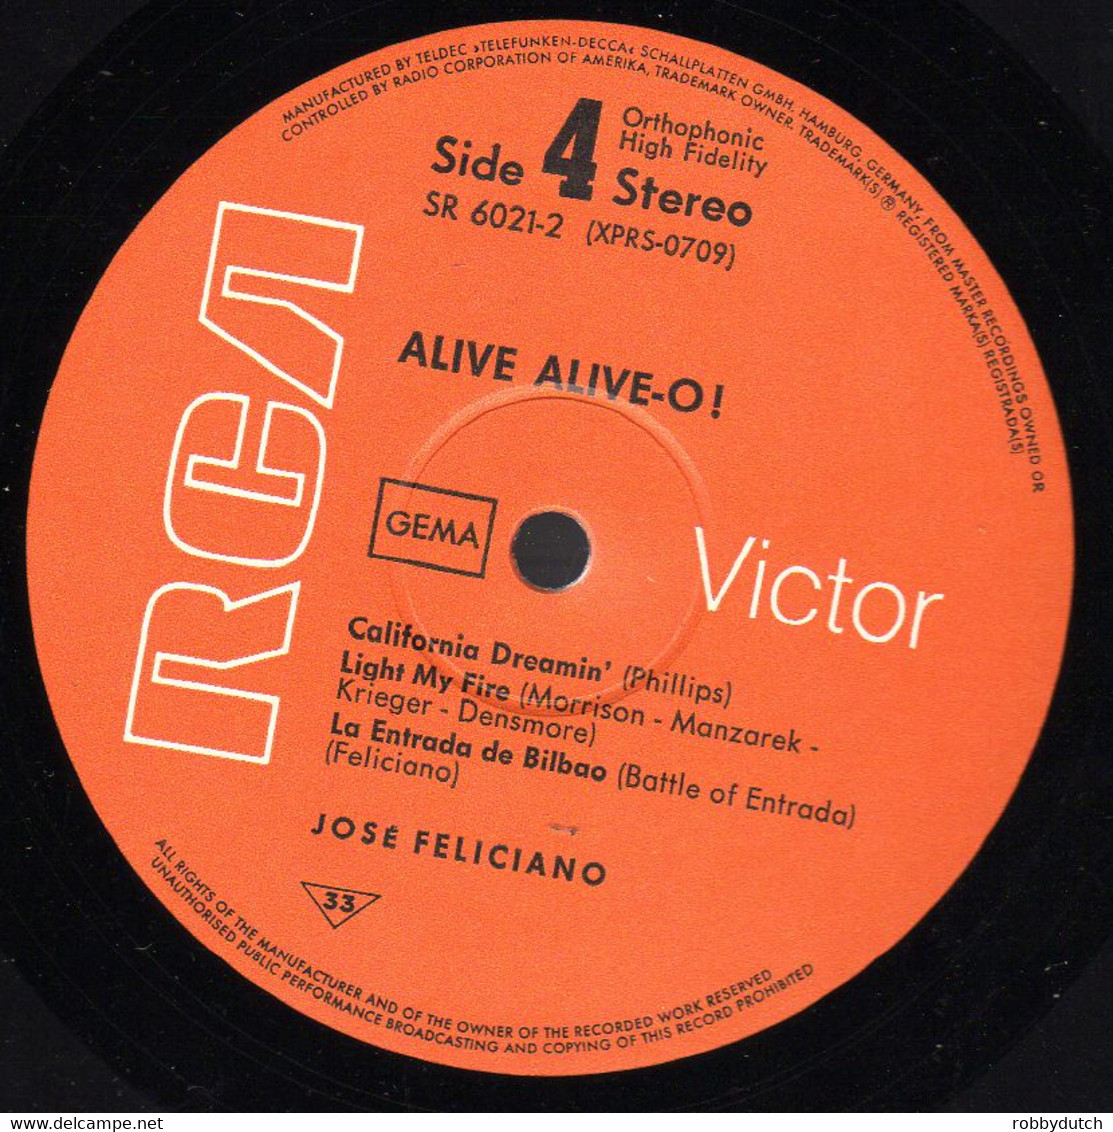 * 2LP *  JOSÉ FELICIANO - ALIVE ALIVE-O! (Live at the London Palladium) (Germany 1969)